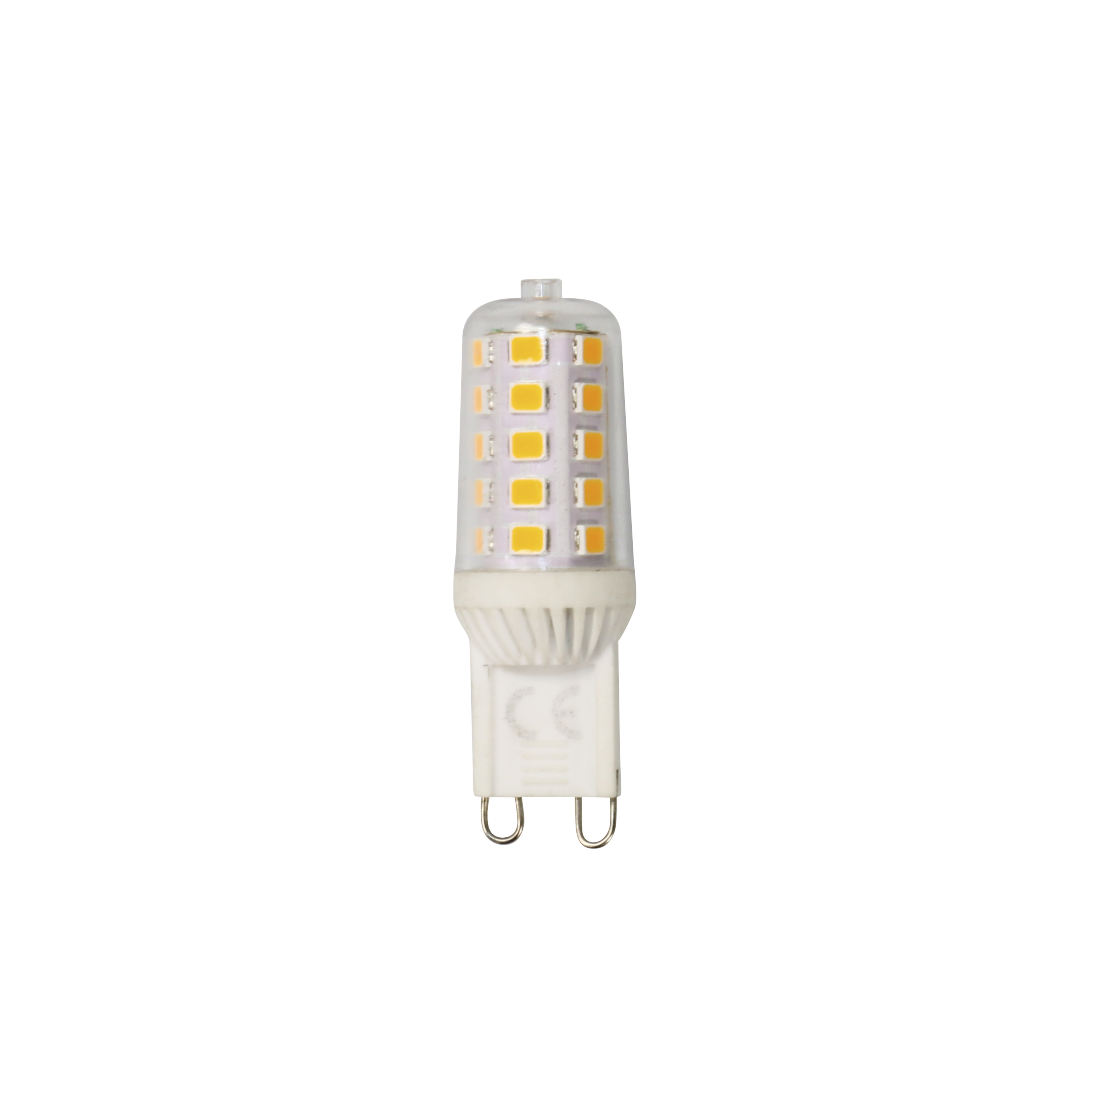 abx High-Res Image - Xavax, Ampoule LED, G9, 300lm remp. 28W, amp. culot broches, régl., blanc chd